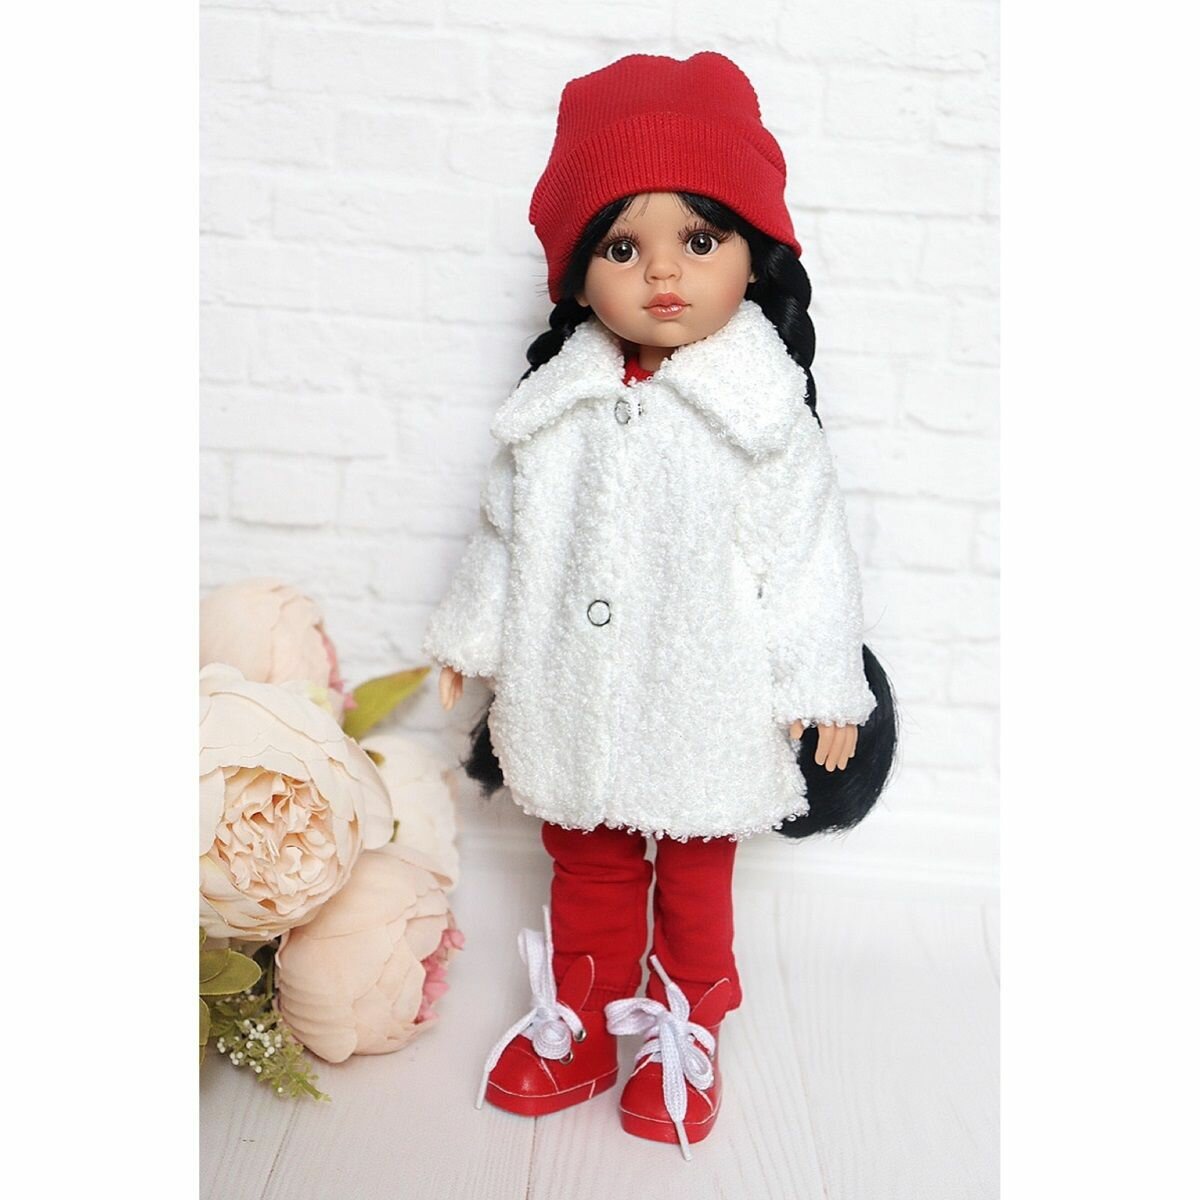 Комплект одежды и обуви для кукол Paola Reina 32 см (шубка ягненок, костюм, шапка, кеды), белый, красный